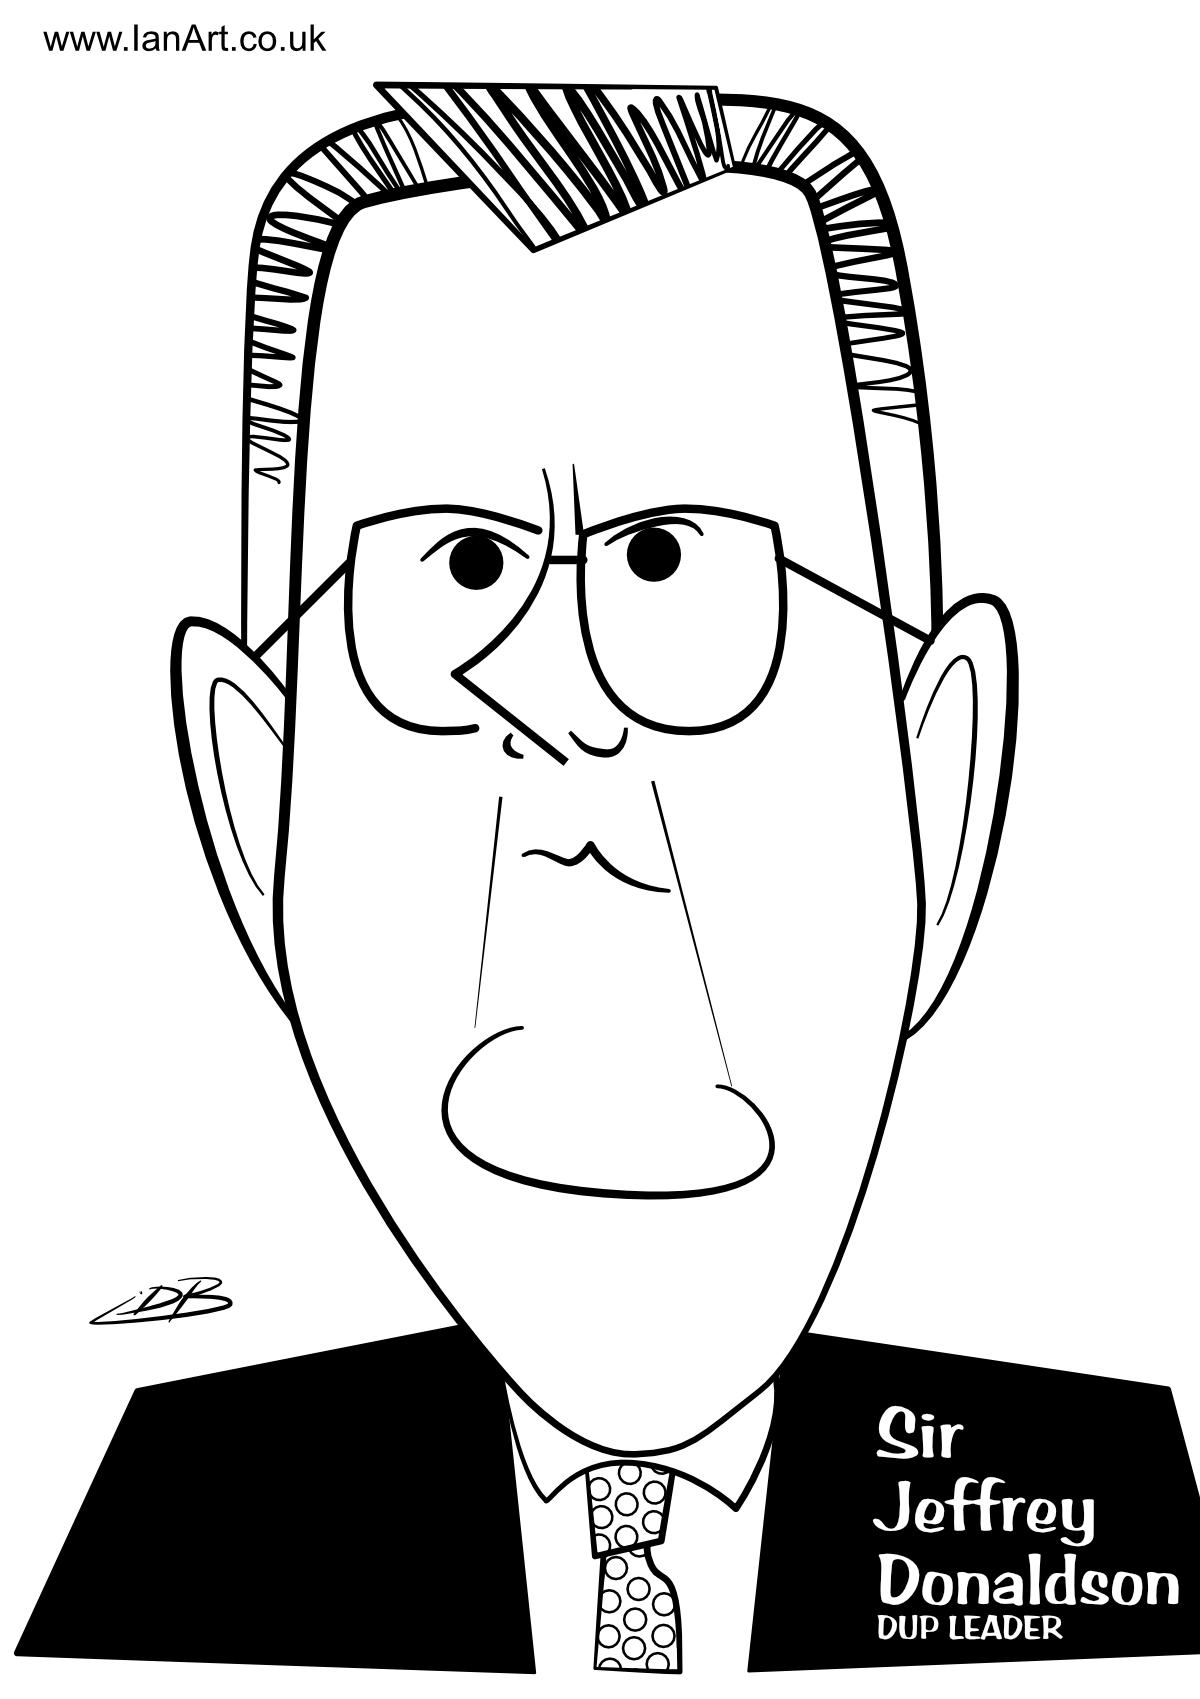 Sir_Jeffrey_Donaldson_DUP_Leader_caricature_cartoon